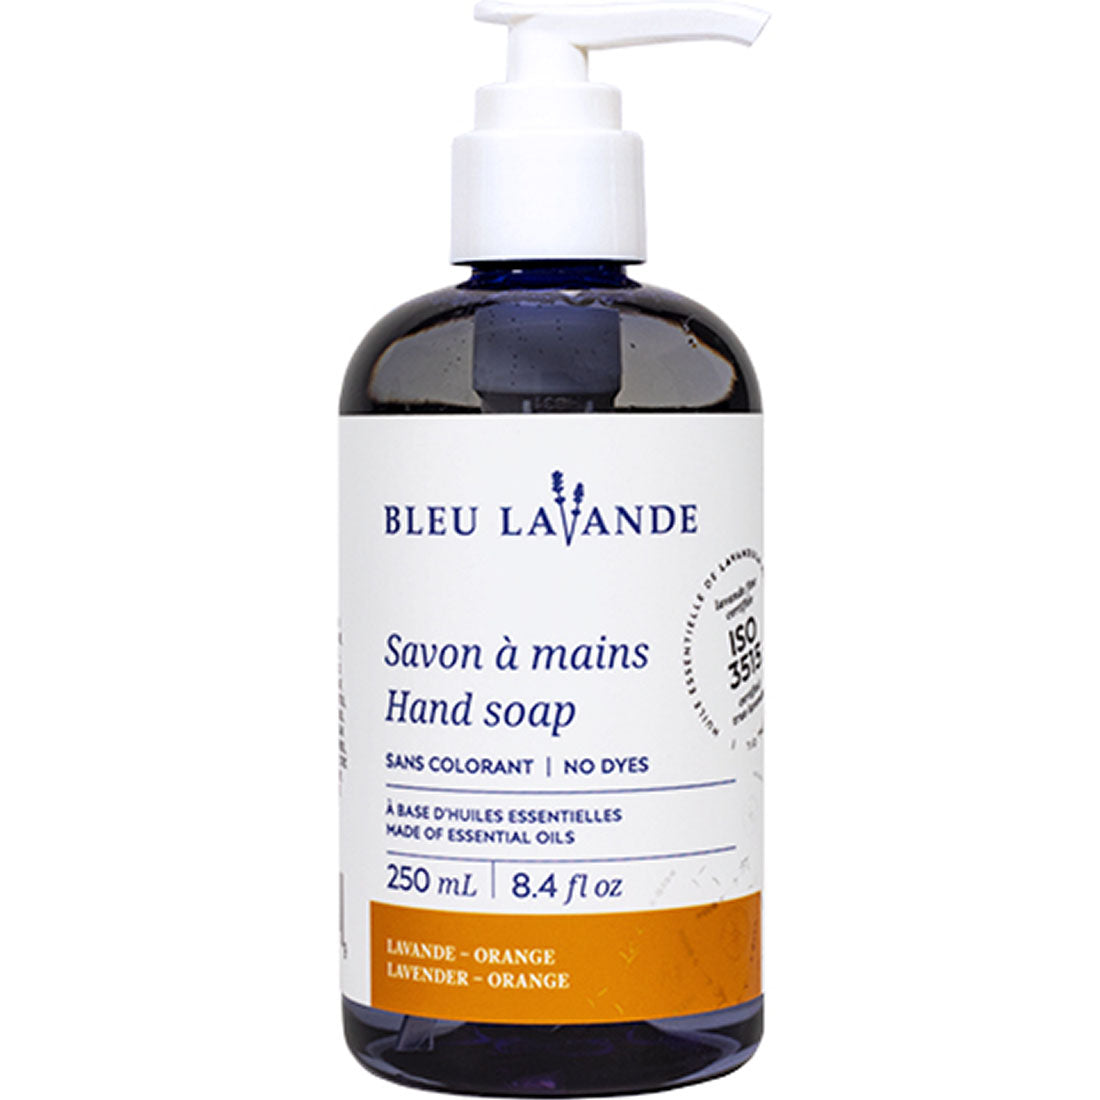 Bleu Lavande Lavender Orange Hand Soap, 250ml